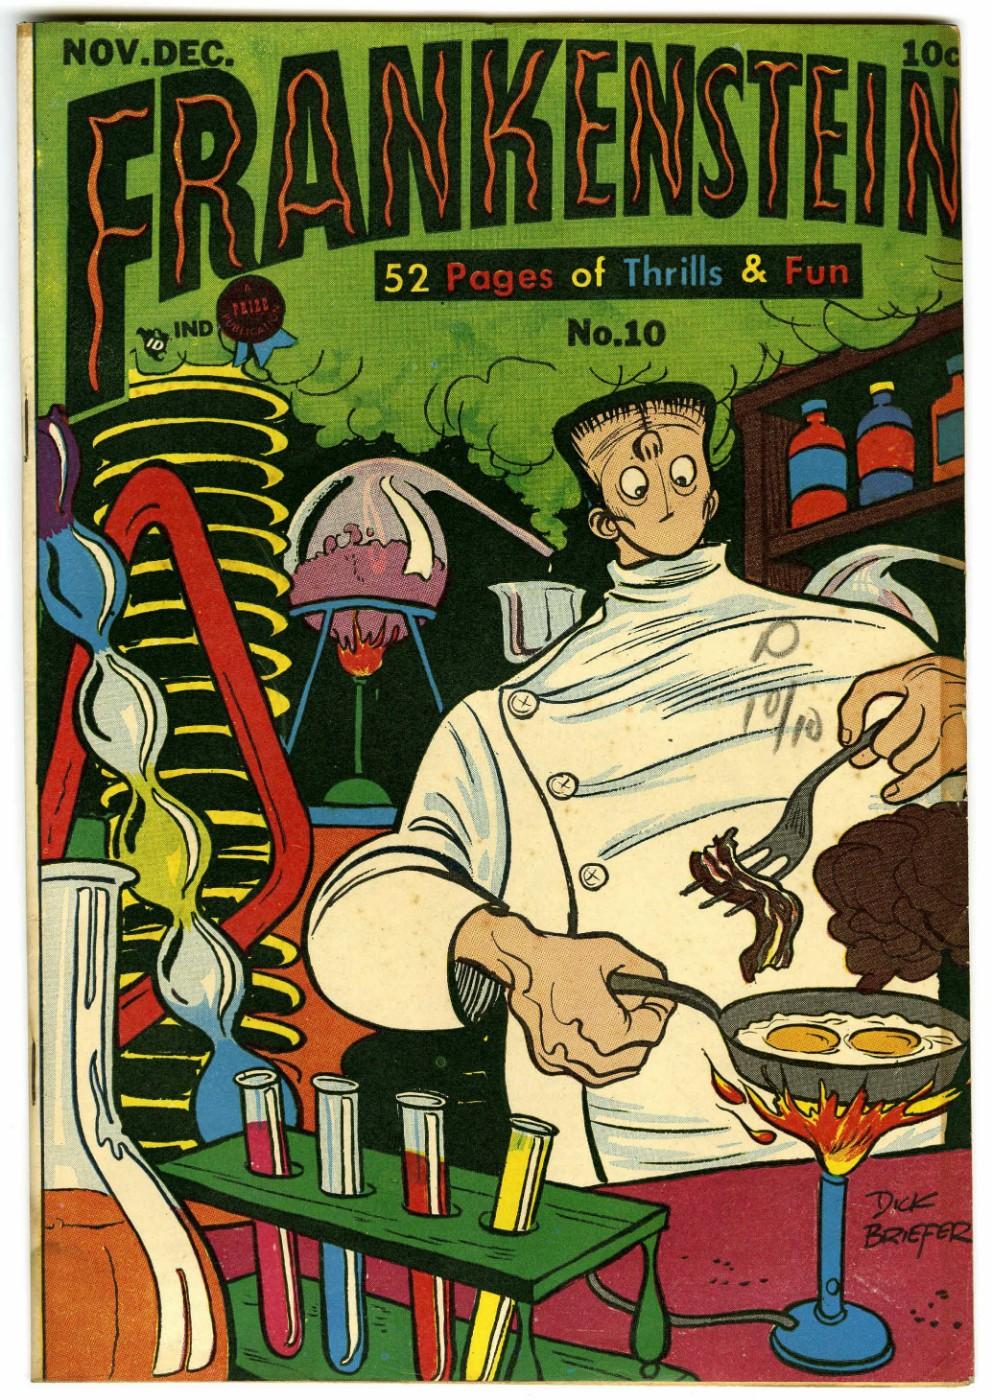 Dick Briefer (1915 – 1980), Frankenstein, no. 10, New York: Prize Comics